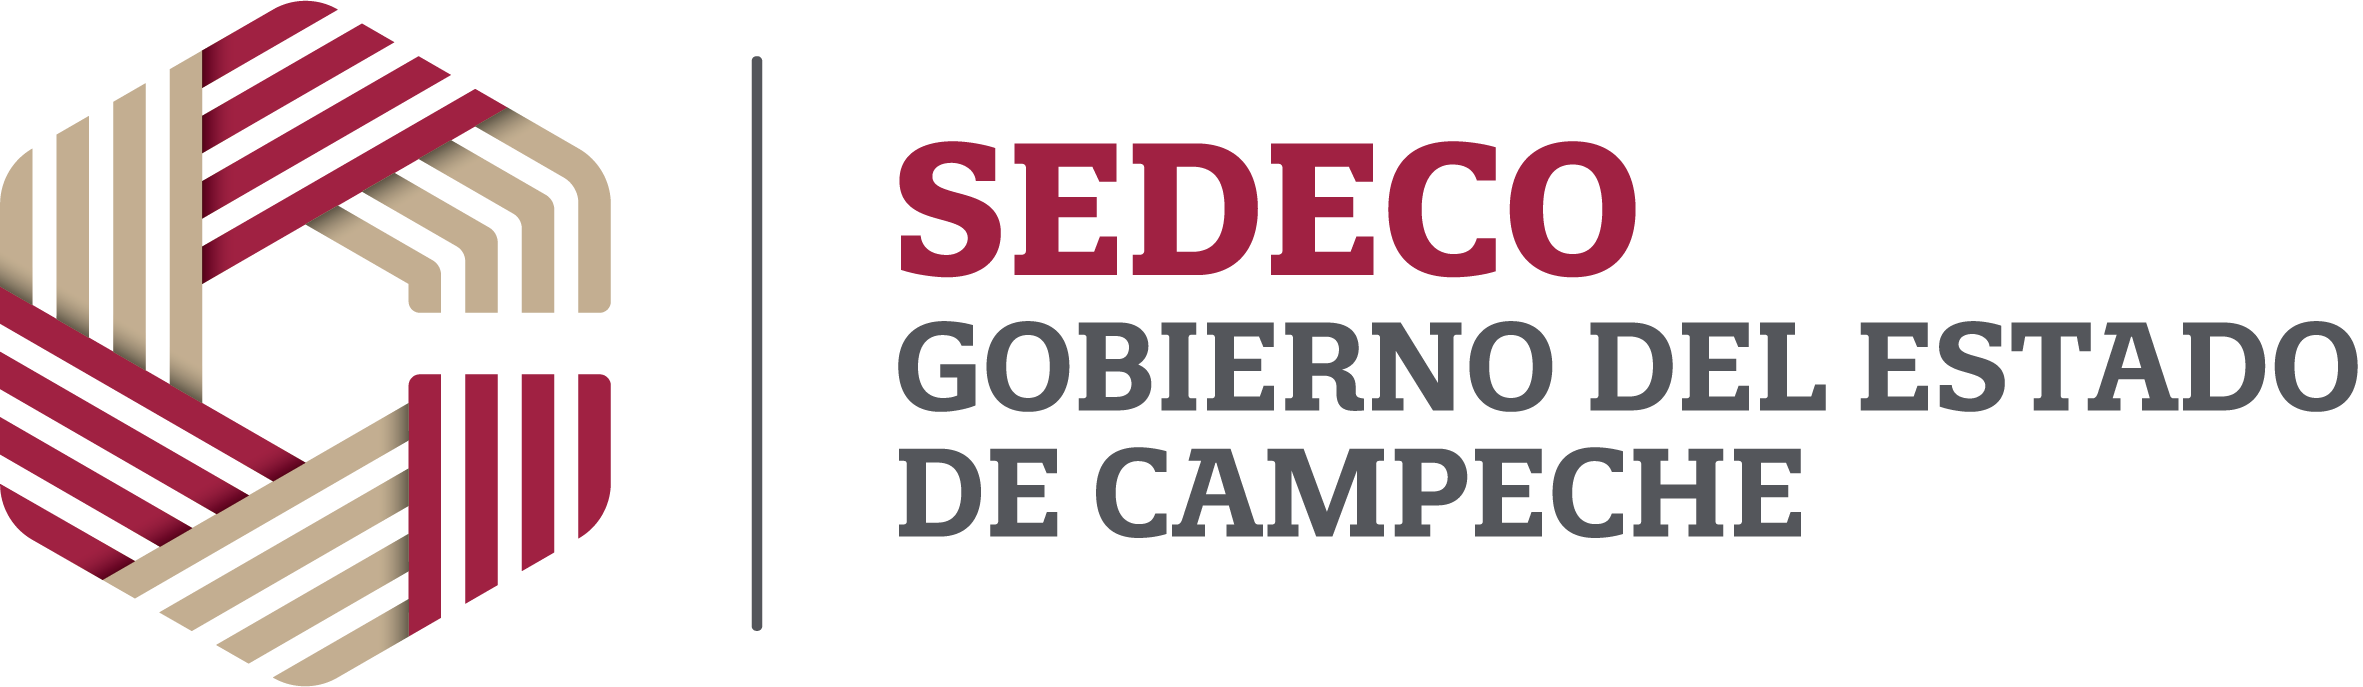 Campeche 1_SEDECO.png